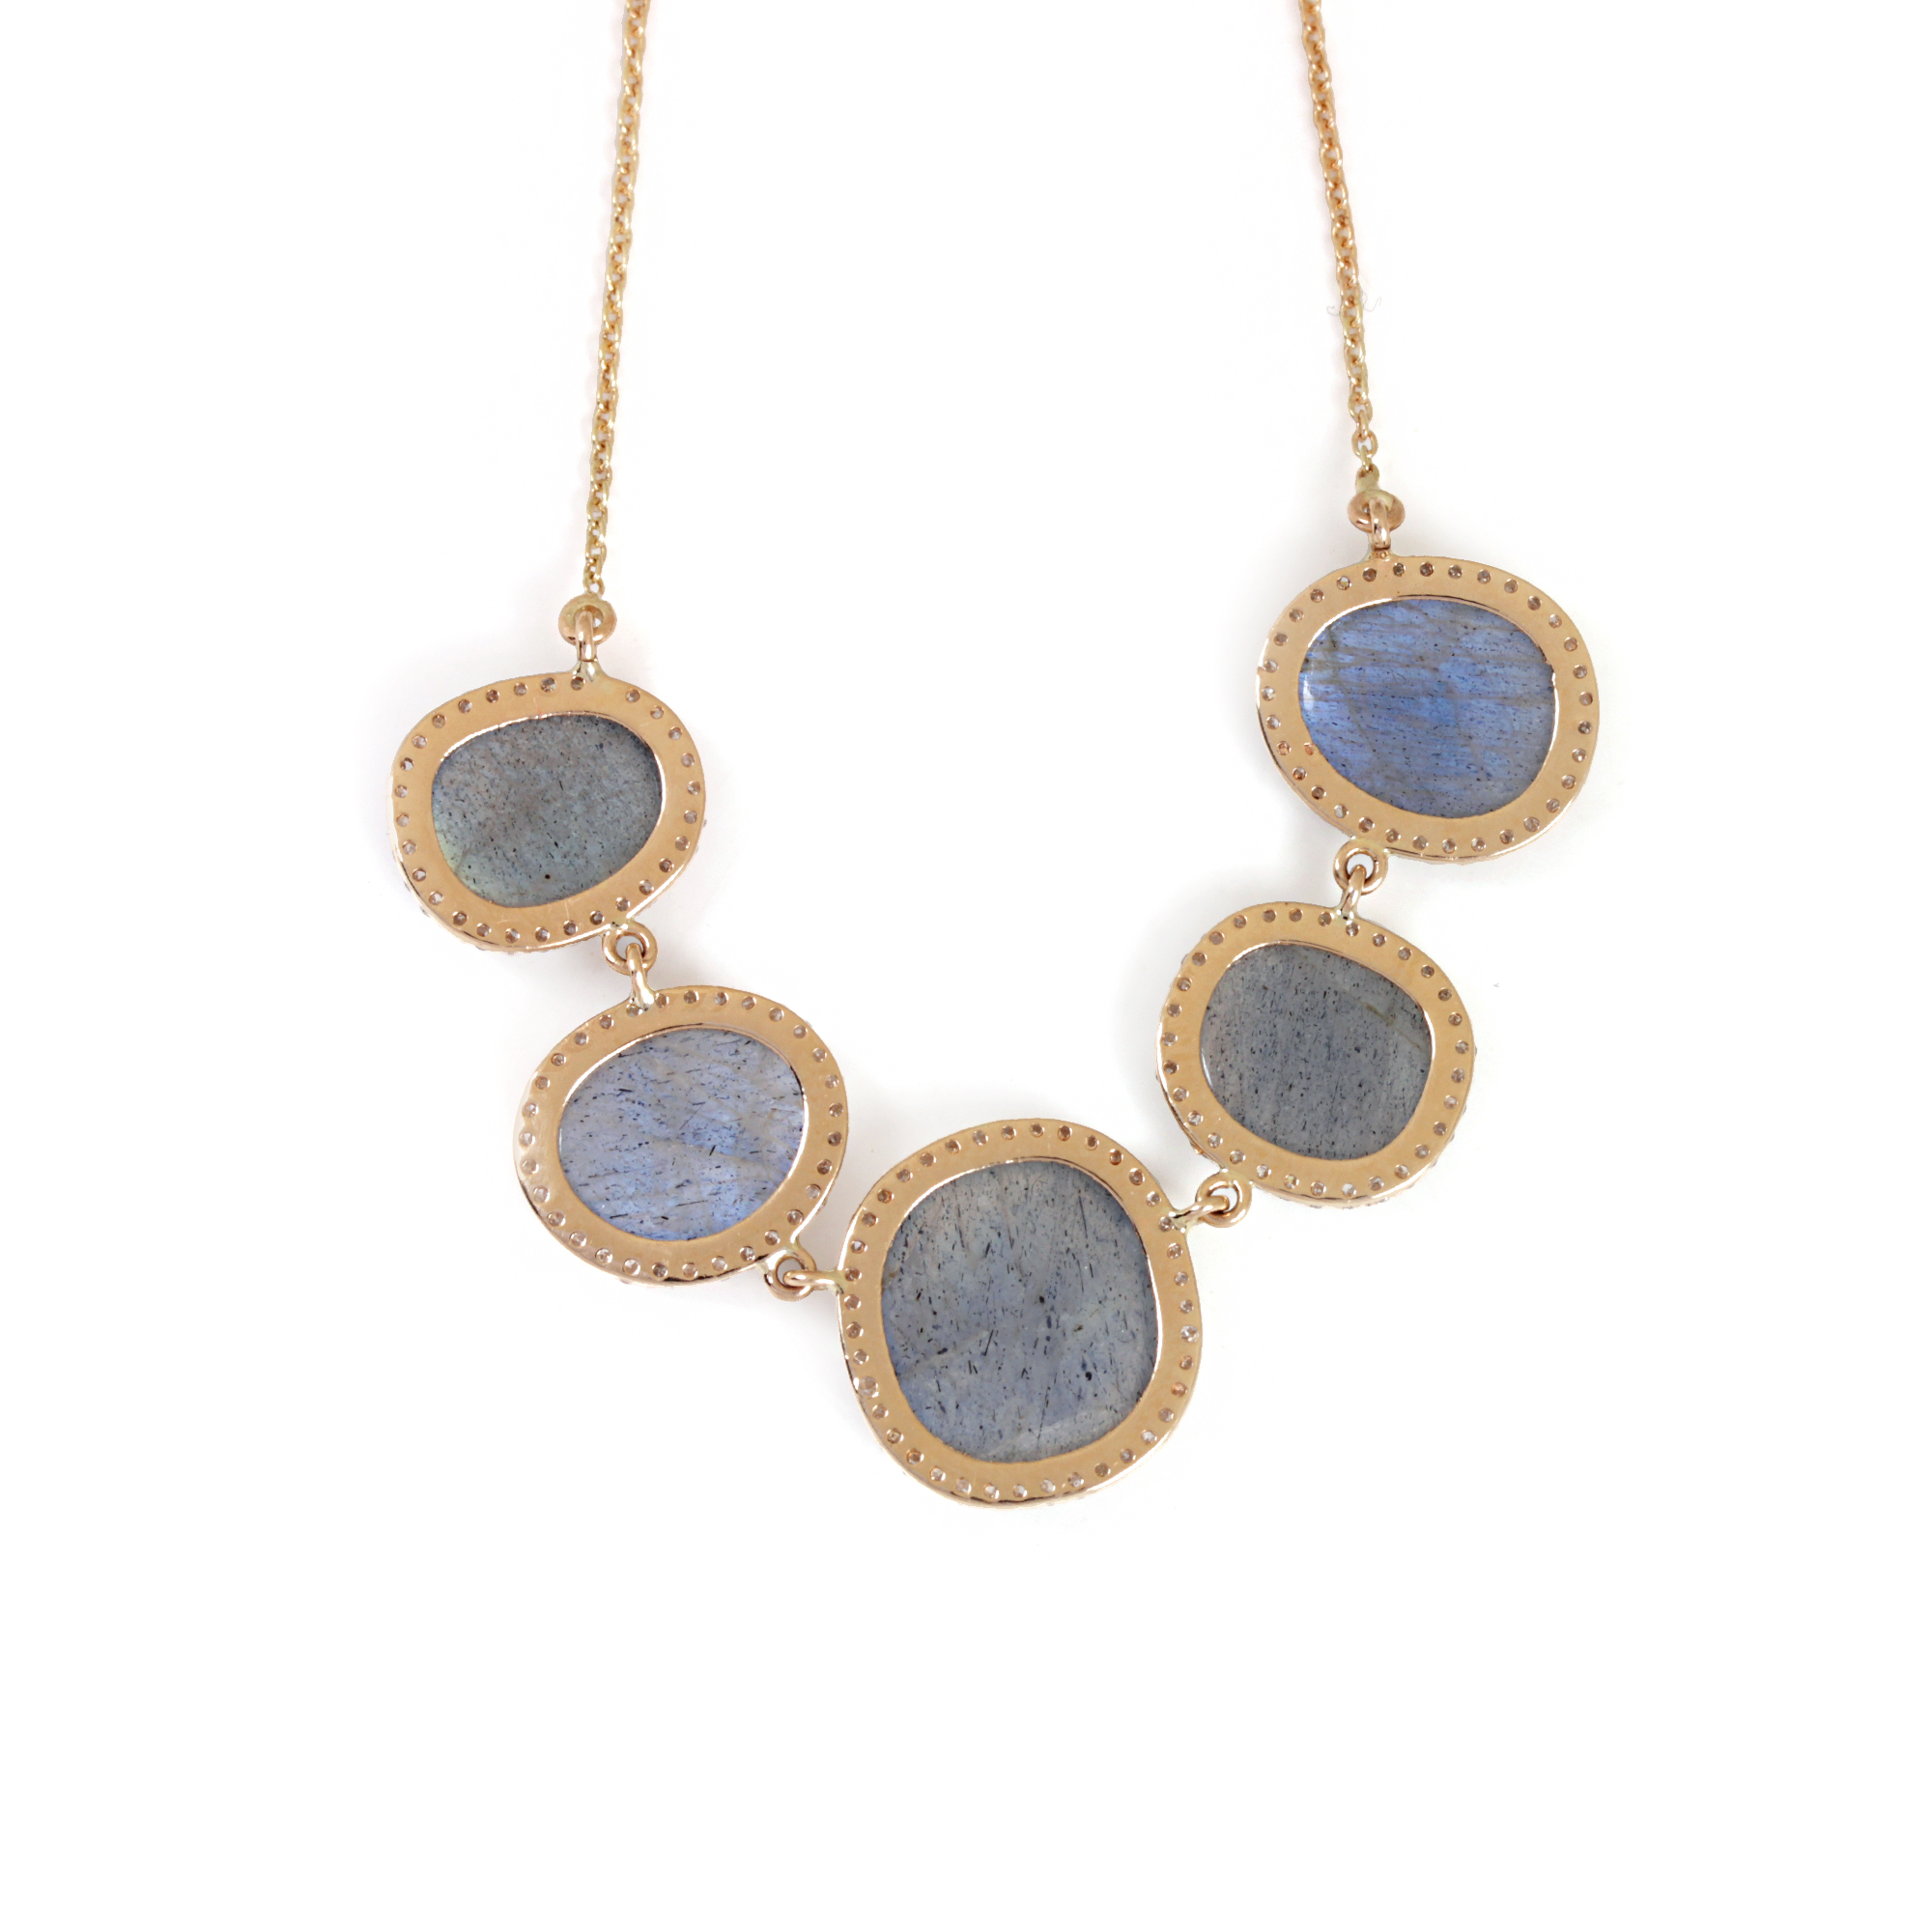 Pave Diamond Labradorite Pendant Necklace 14K Solid Gold Chain Jewelry